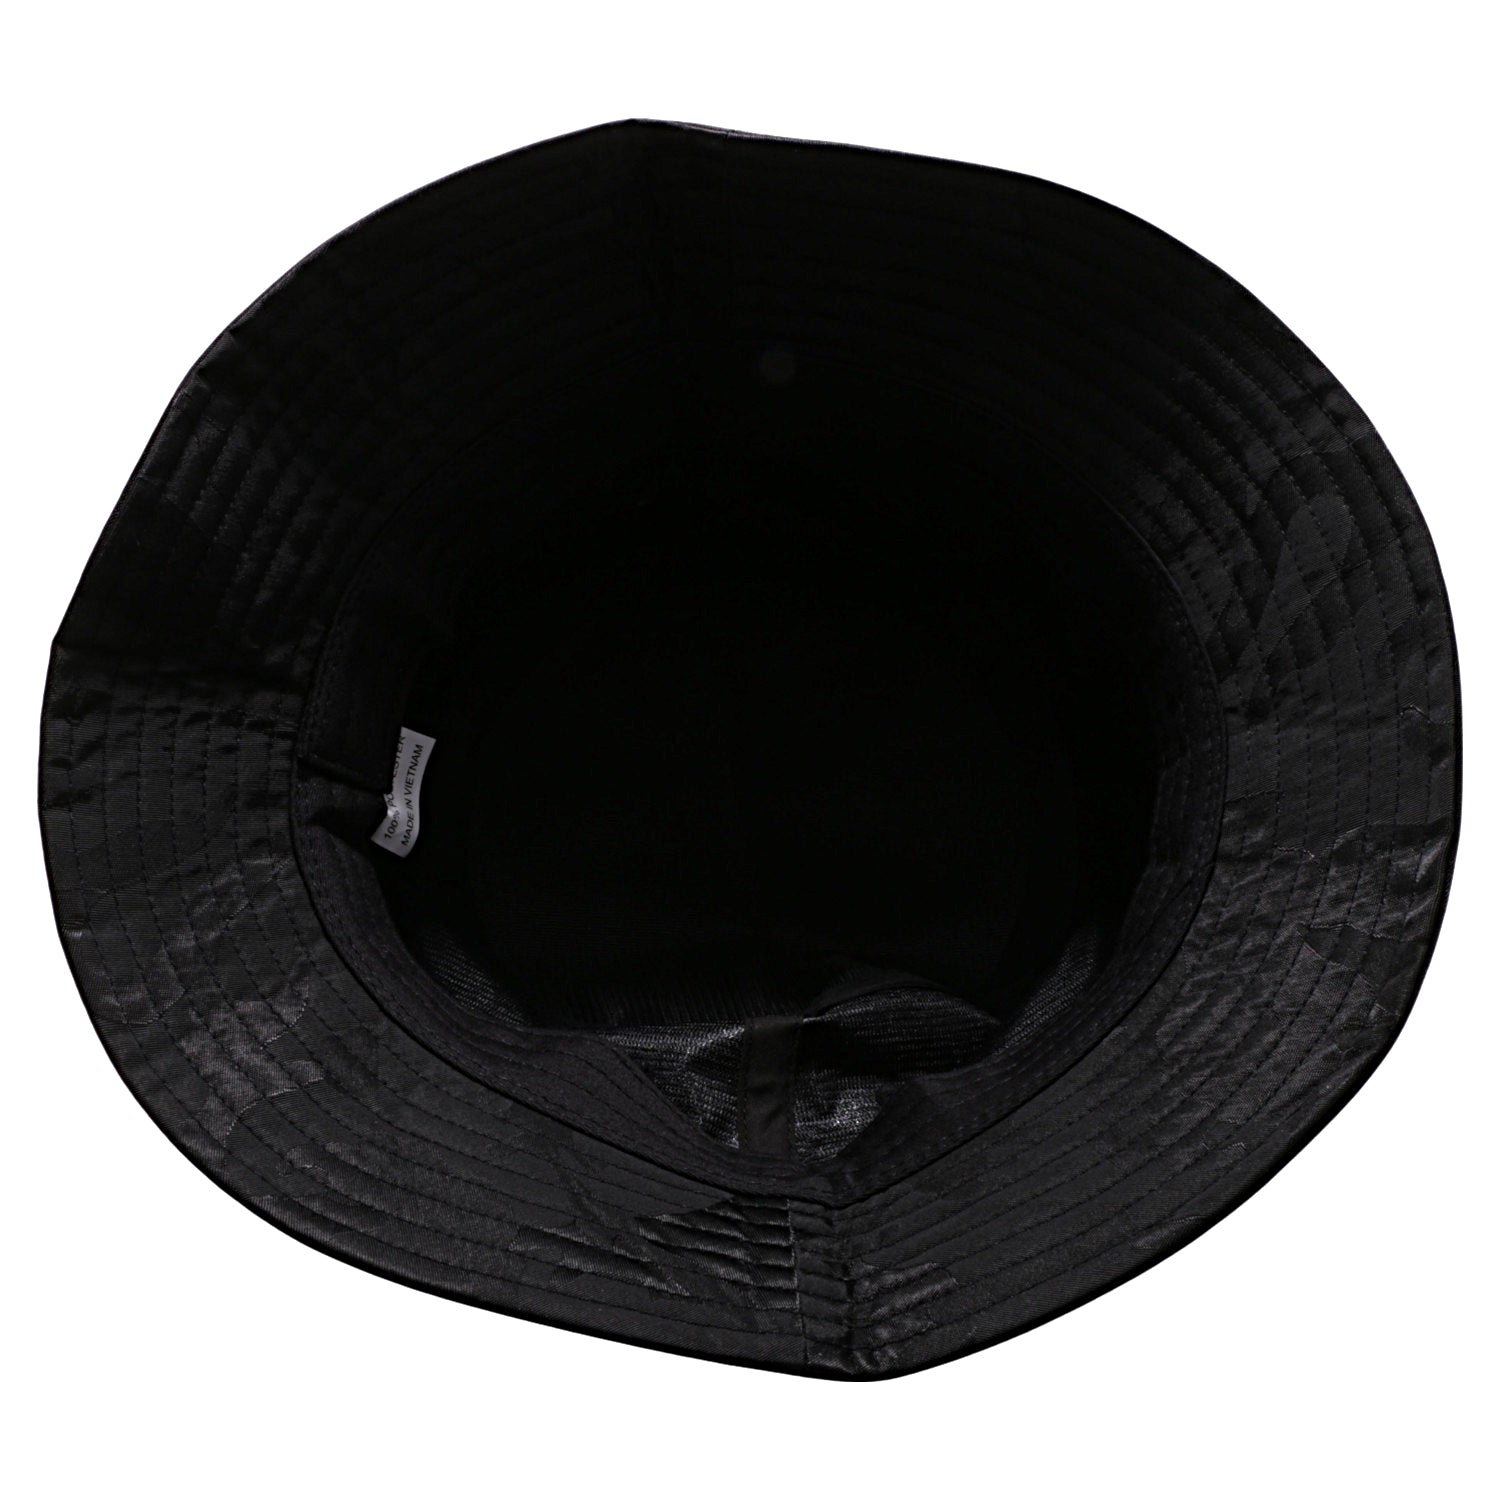 PB261 Pit Bull Cambridge Shiny Camo Bucket Hats [Black] – CHOICE CAP, INC.